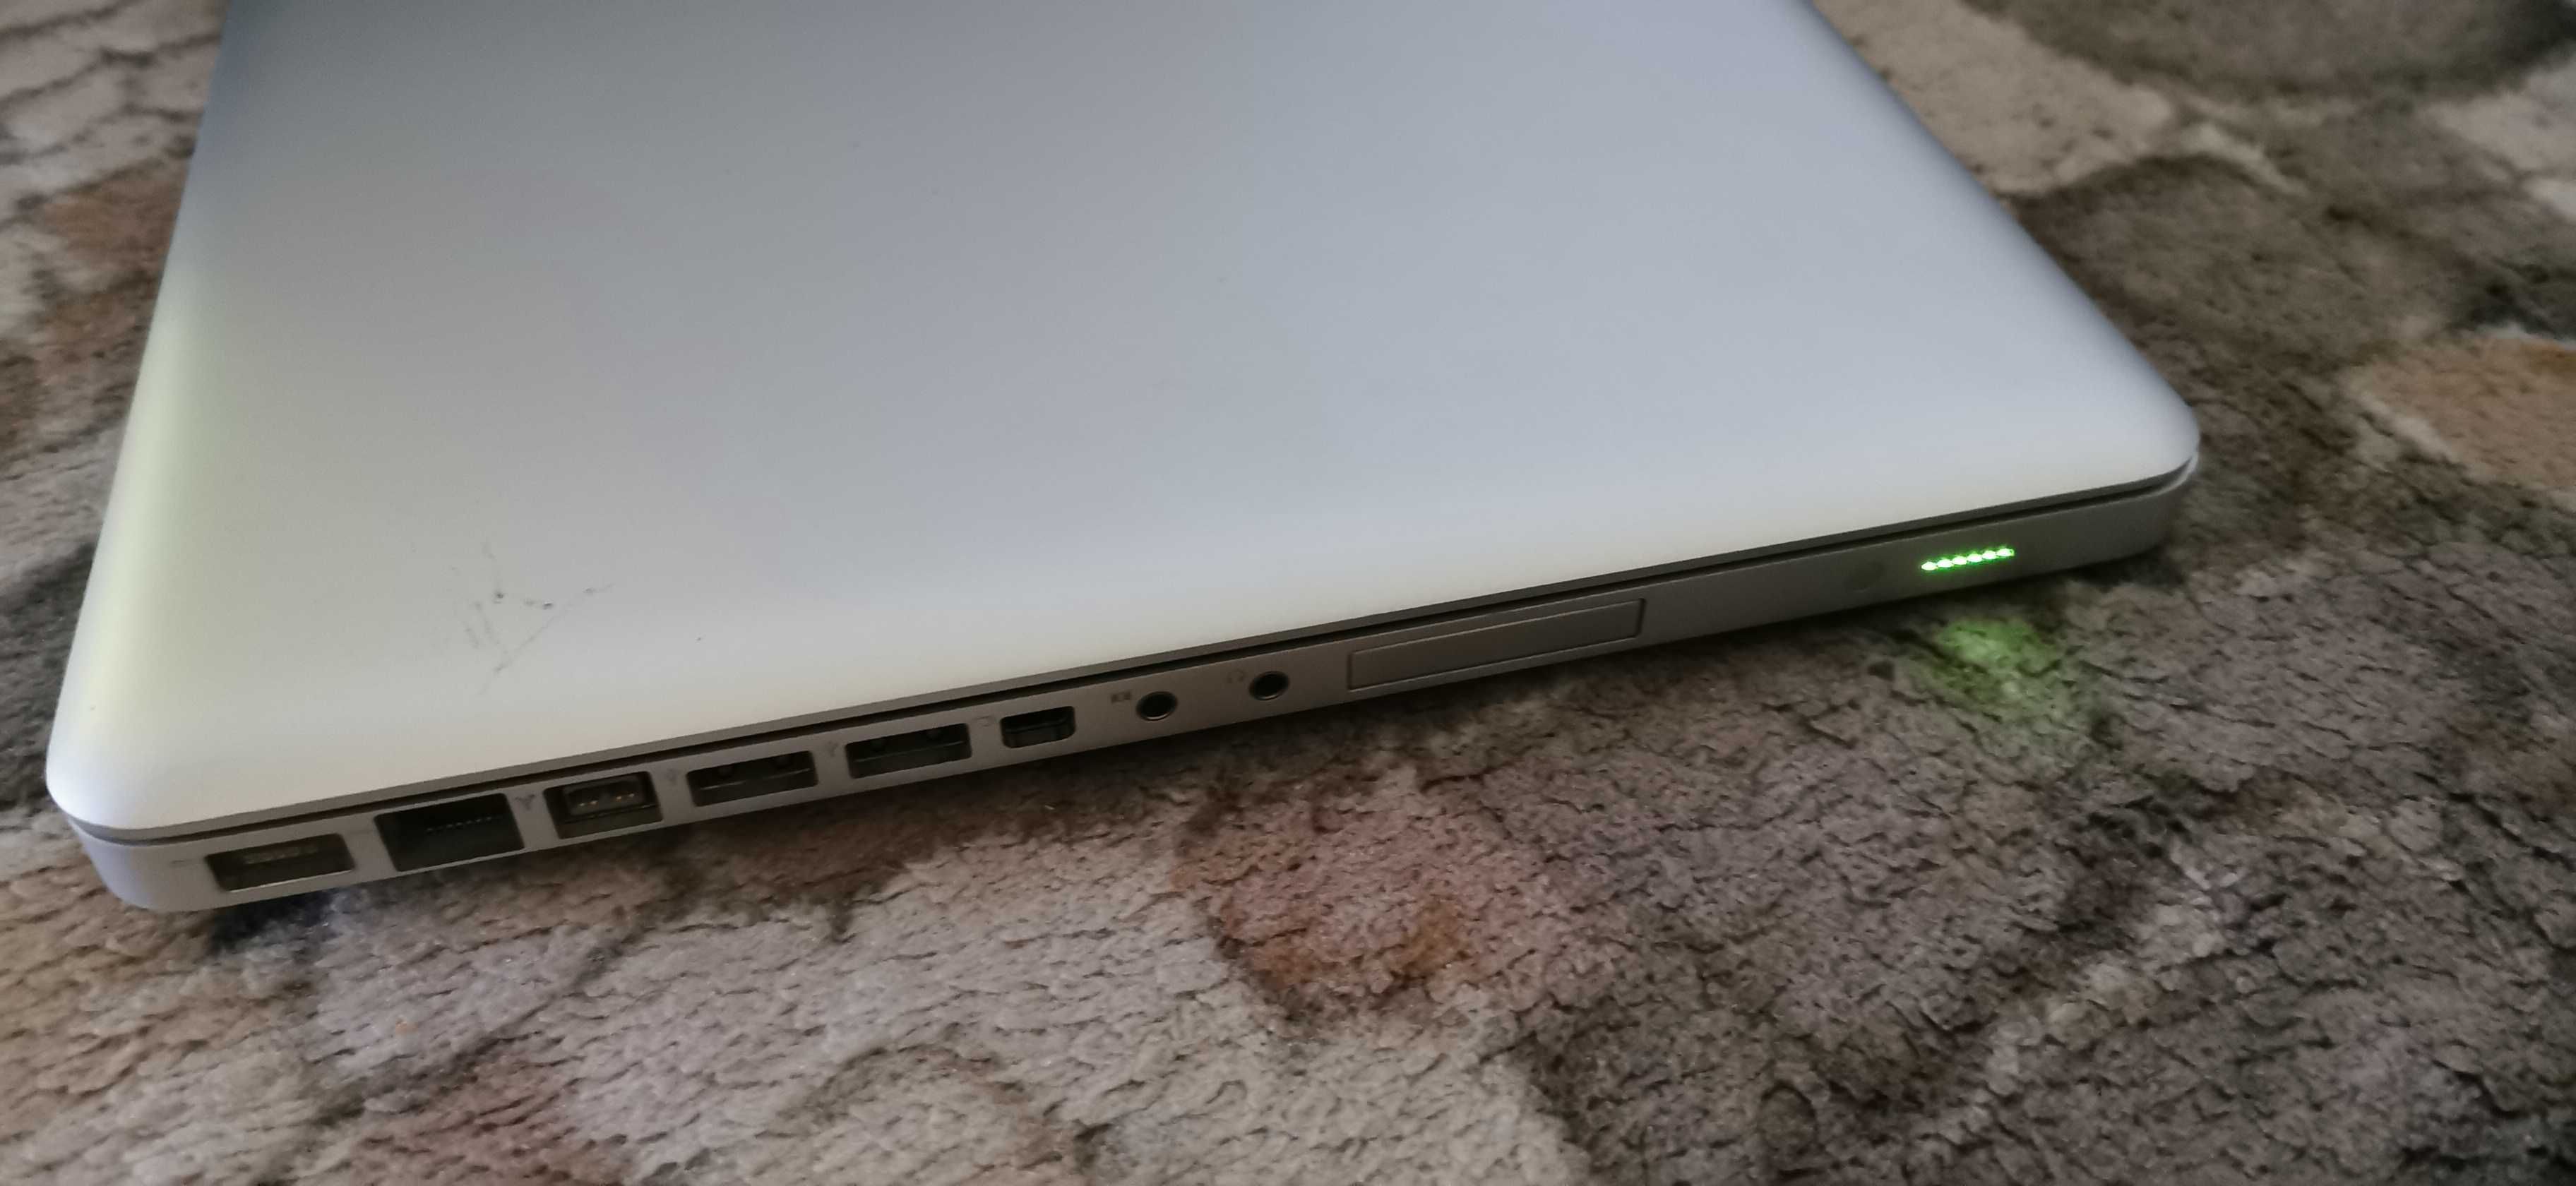 laptop Apple Macbook Pro A1286  defect